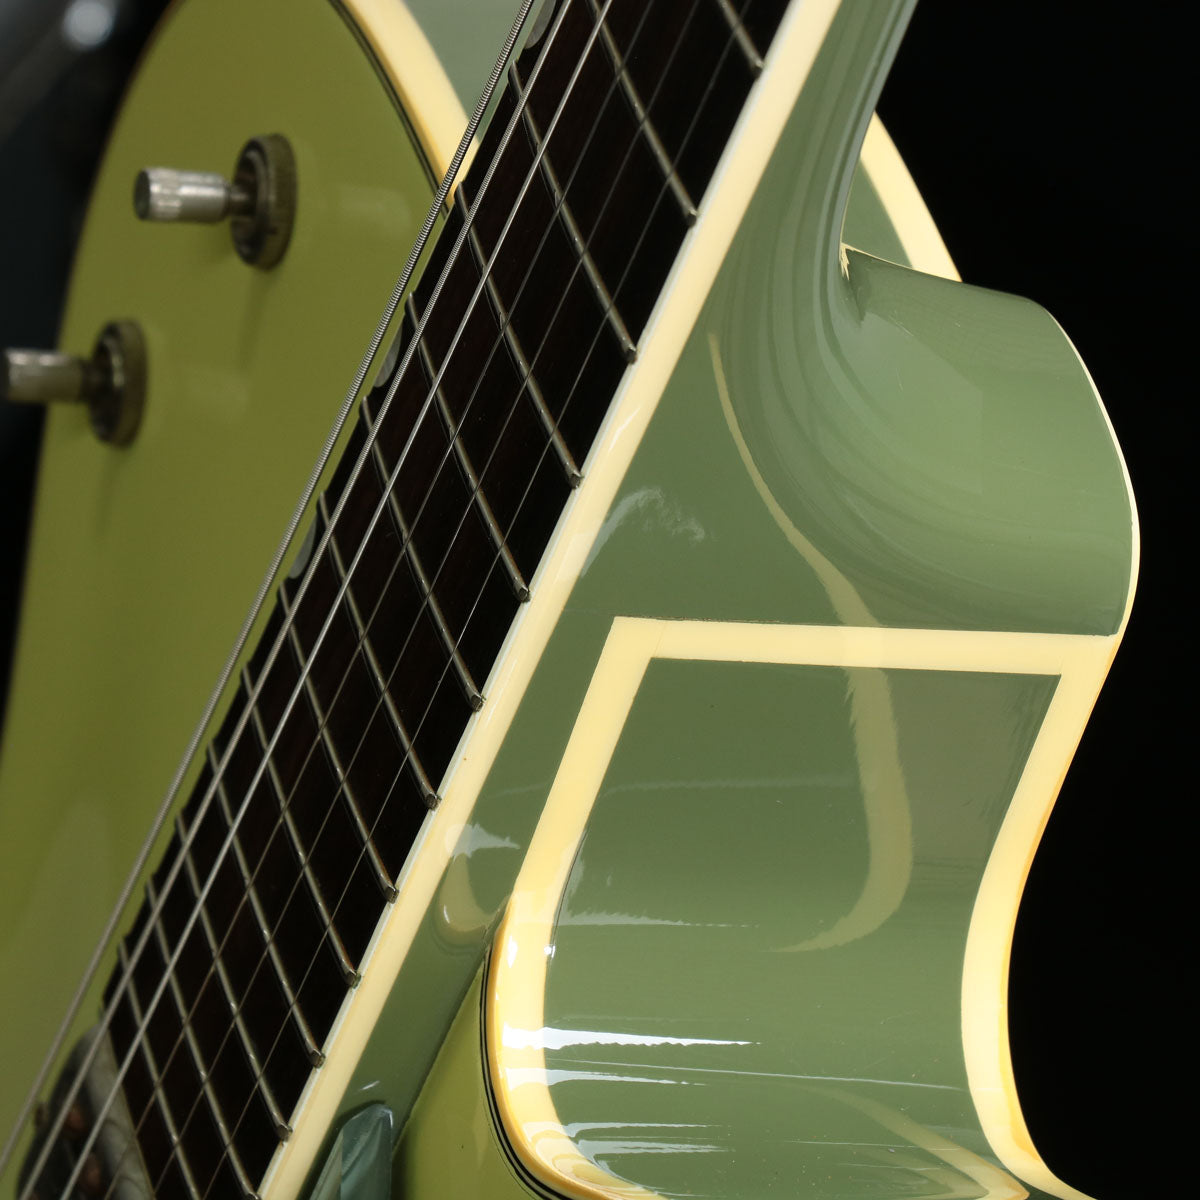 [SN 931118-7] USED GRETSCH / 6118 Anniversary 2Tone Smoke Green [1993/3.54kg] Gretsch Electric Guitar [08]